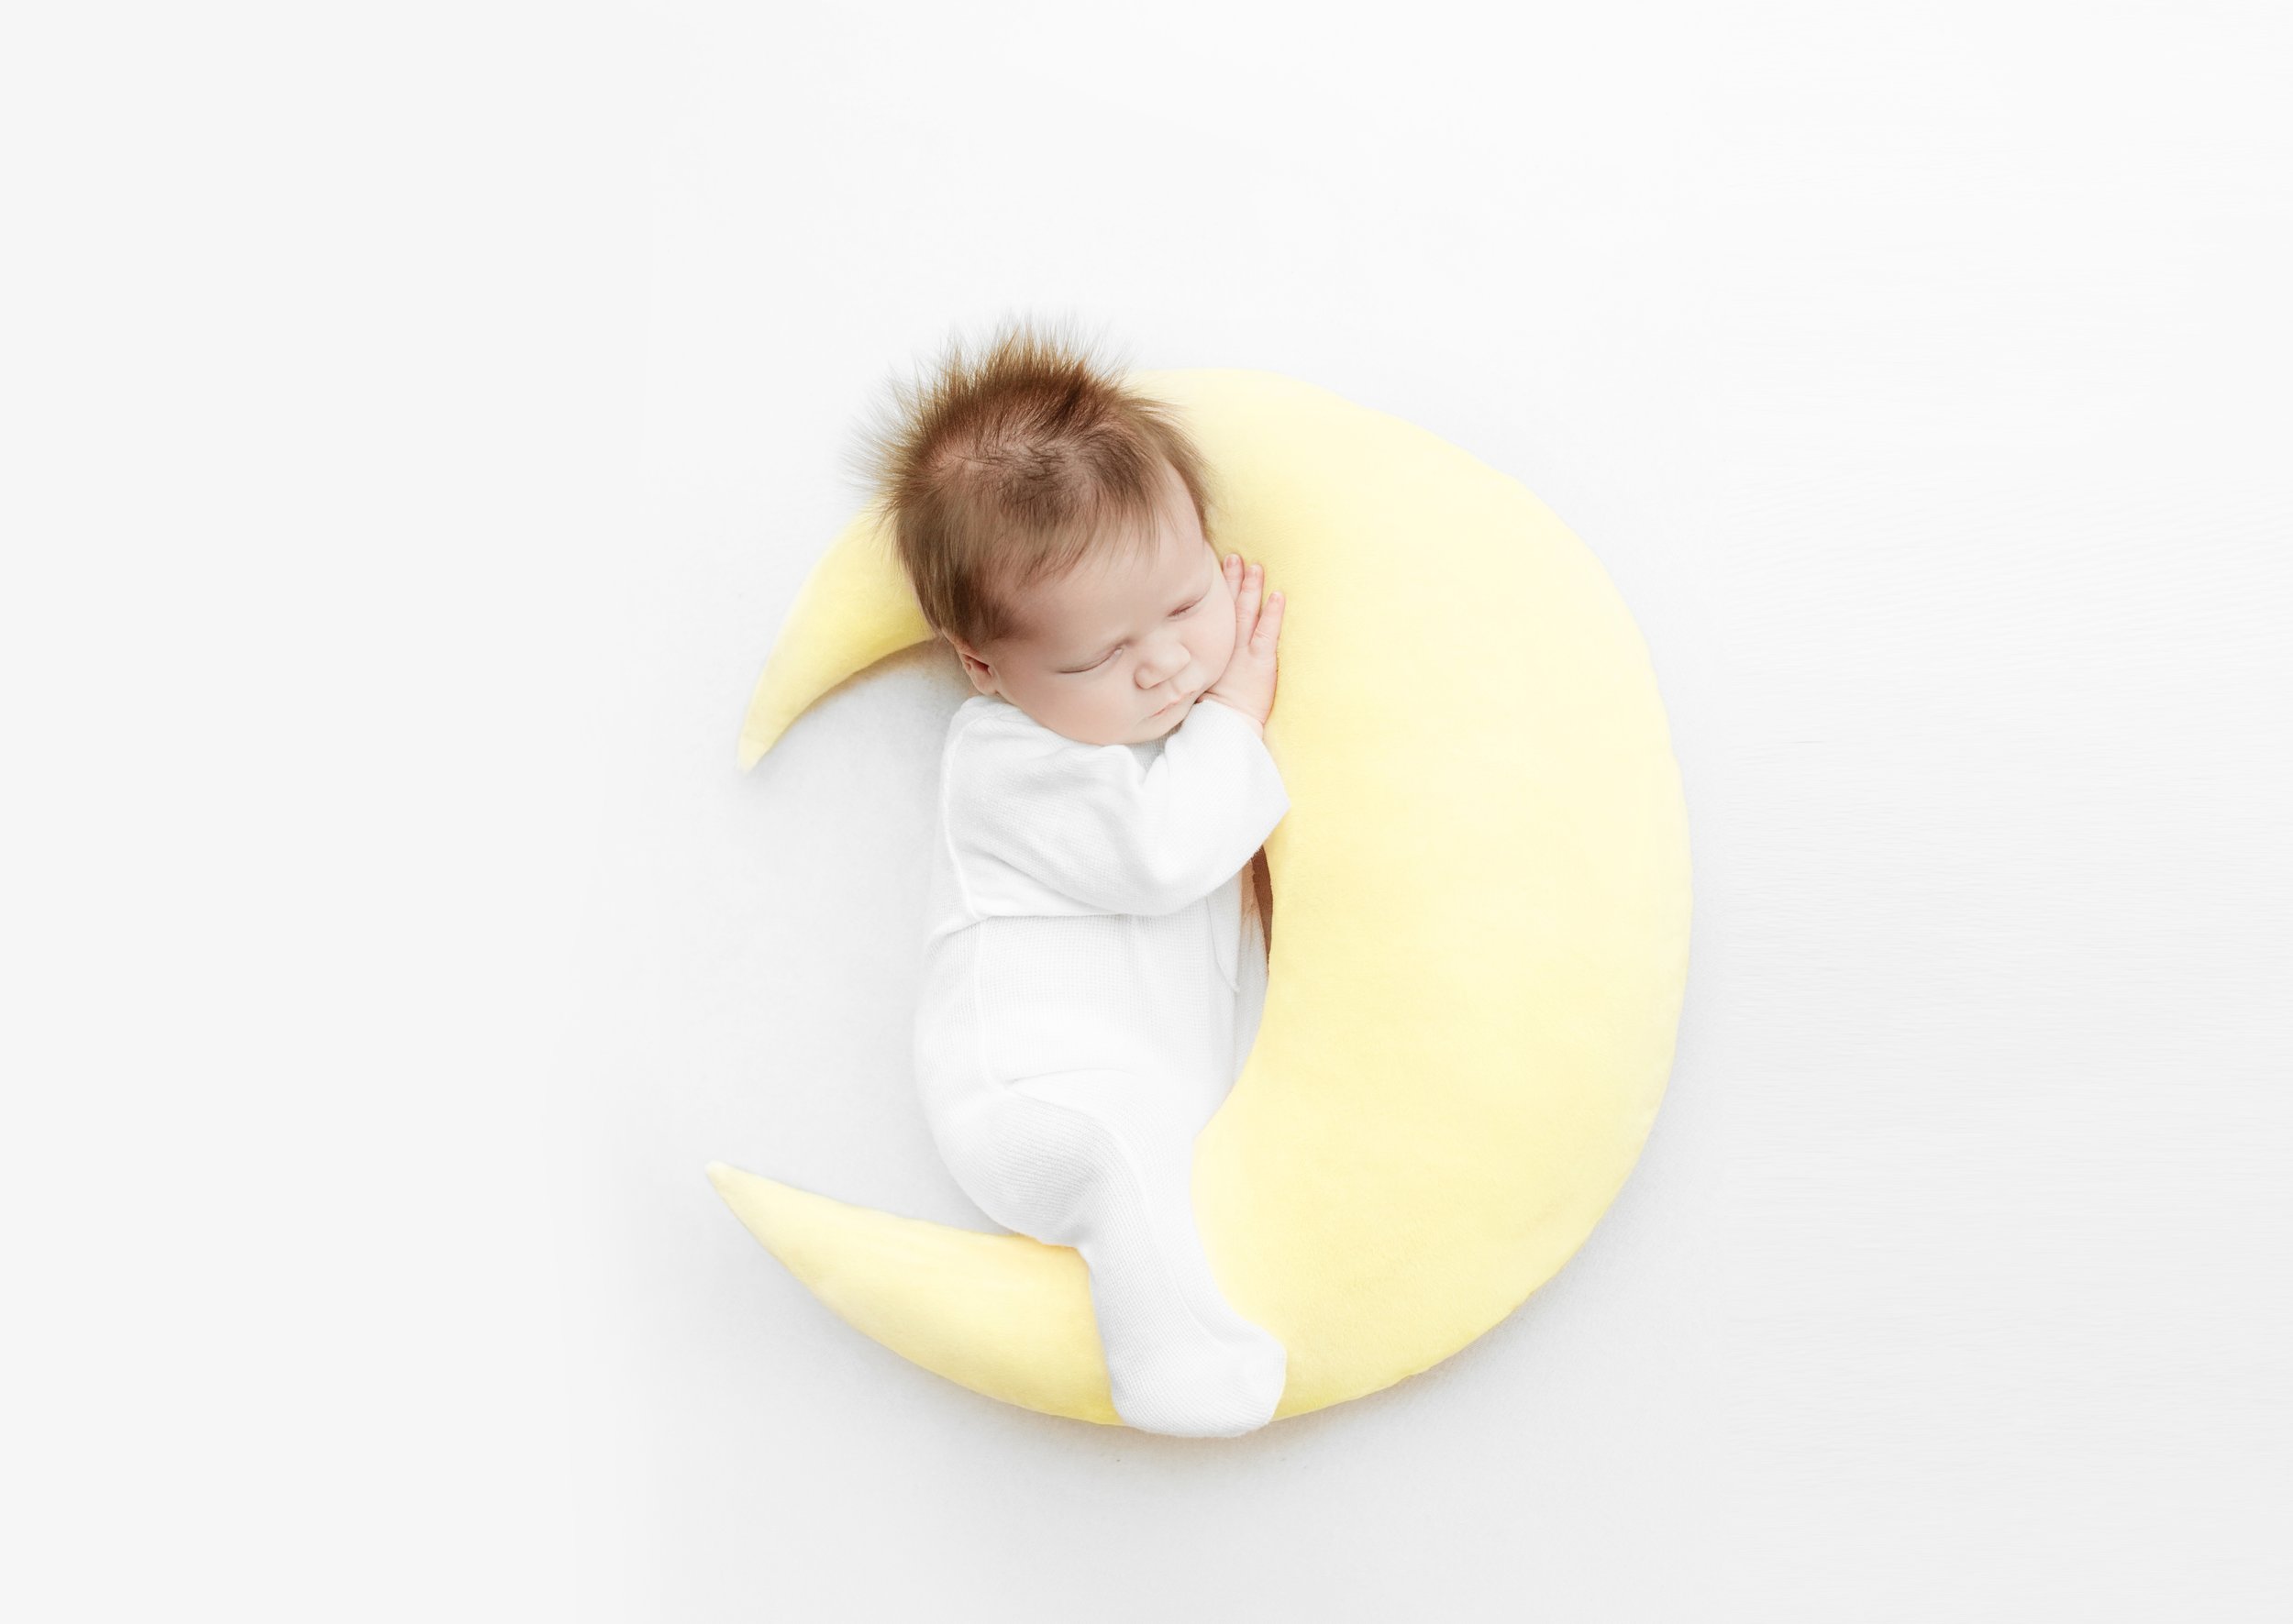 newborn baby boy, sleeping on moon pillow during newborn photoshoot, in mount juliet tennessee photography studio